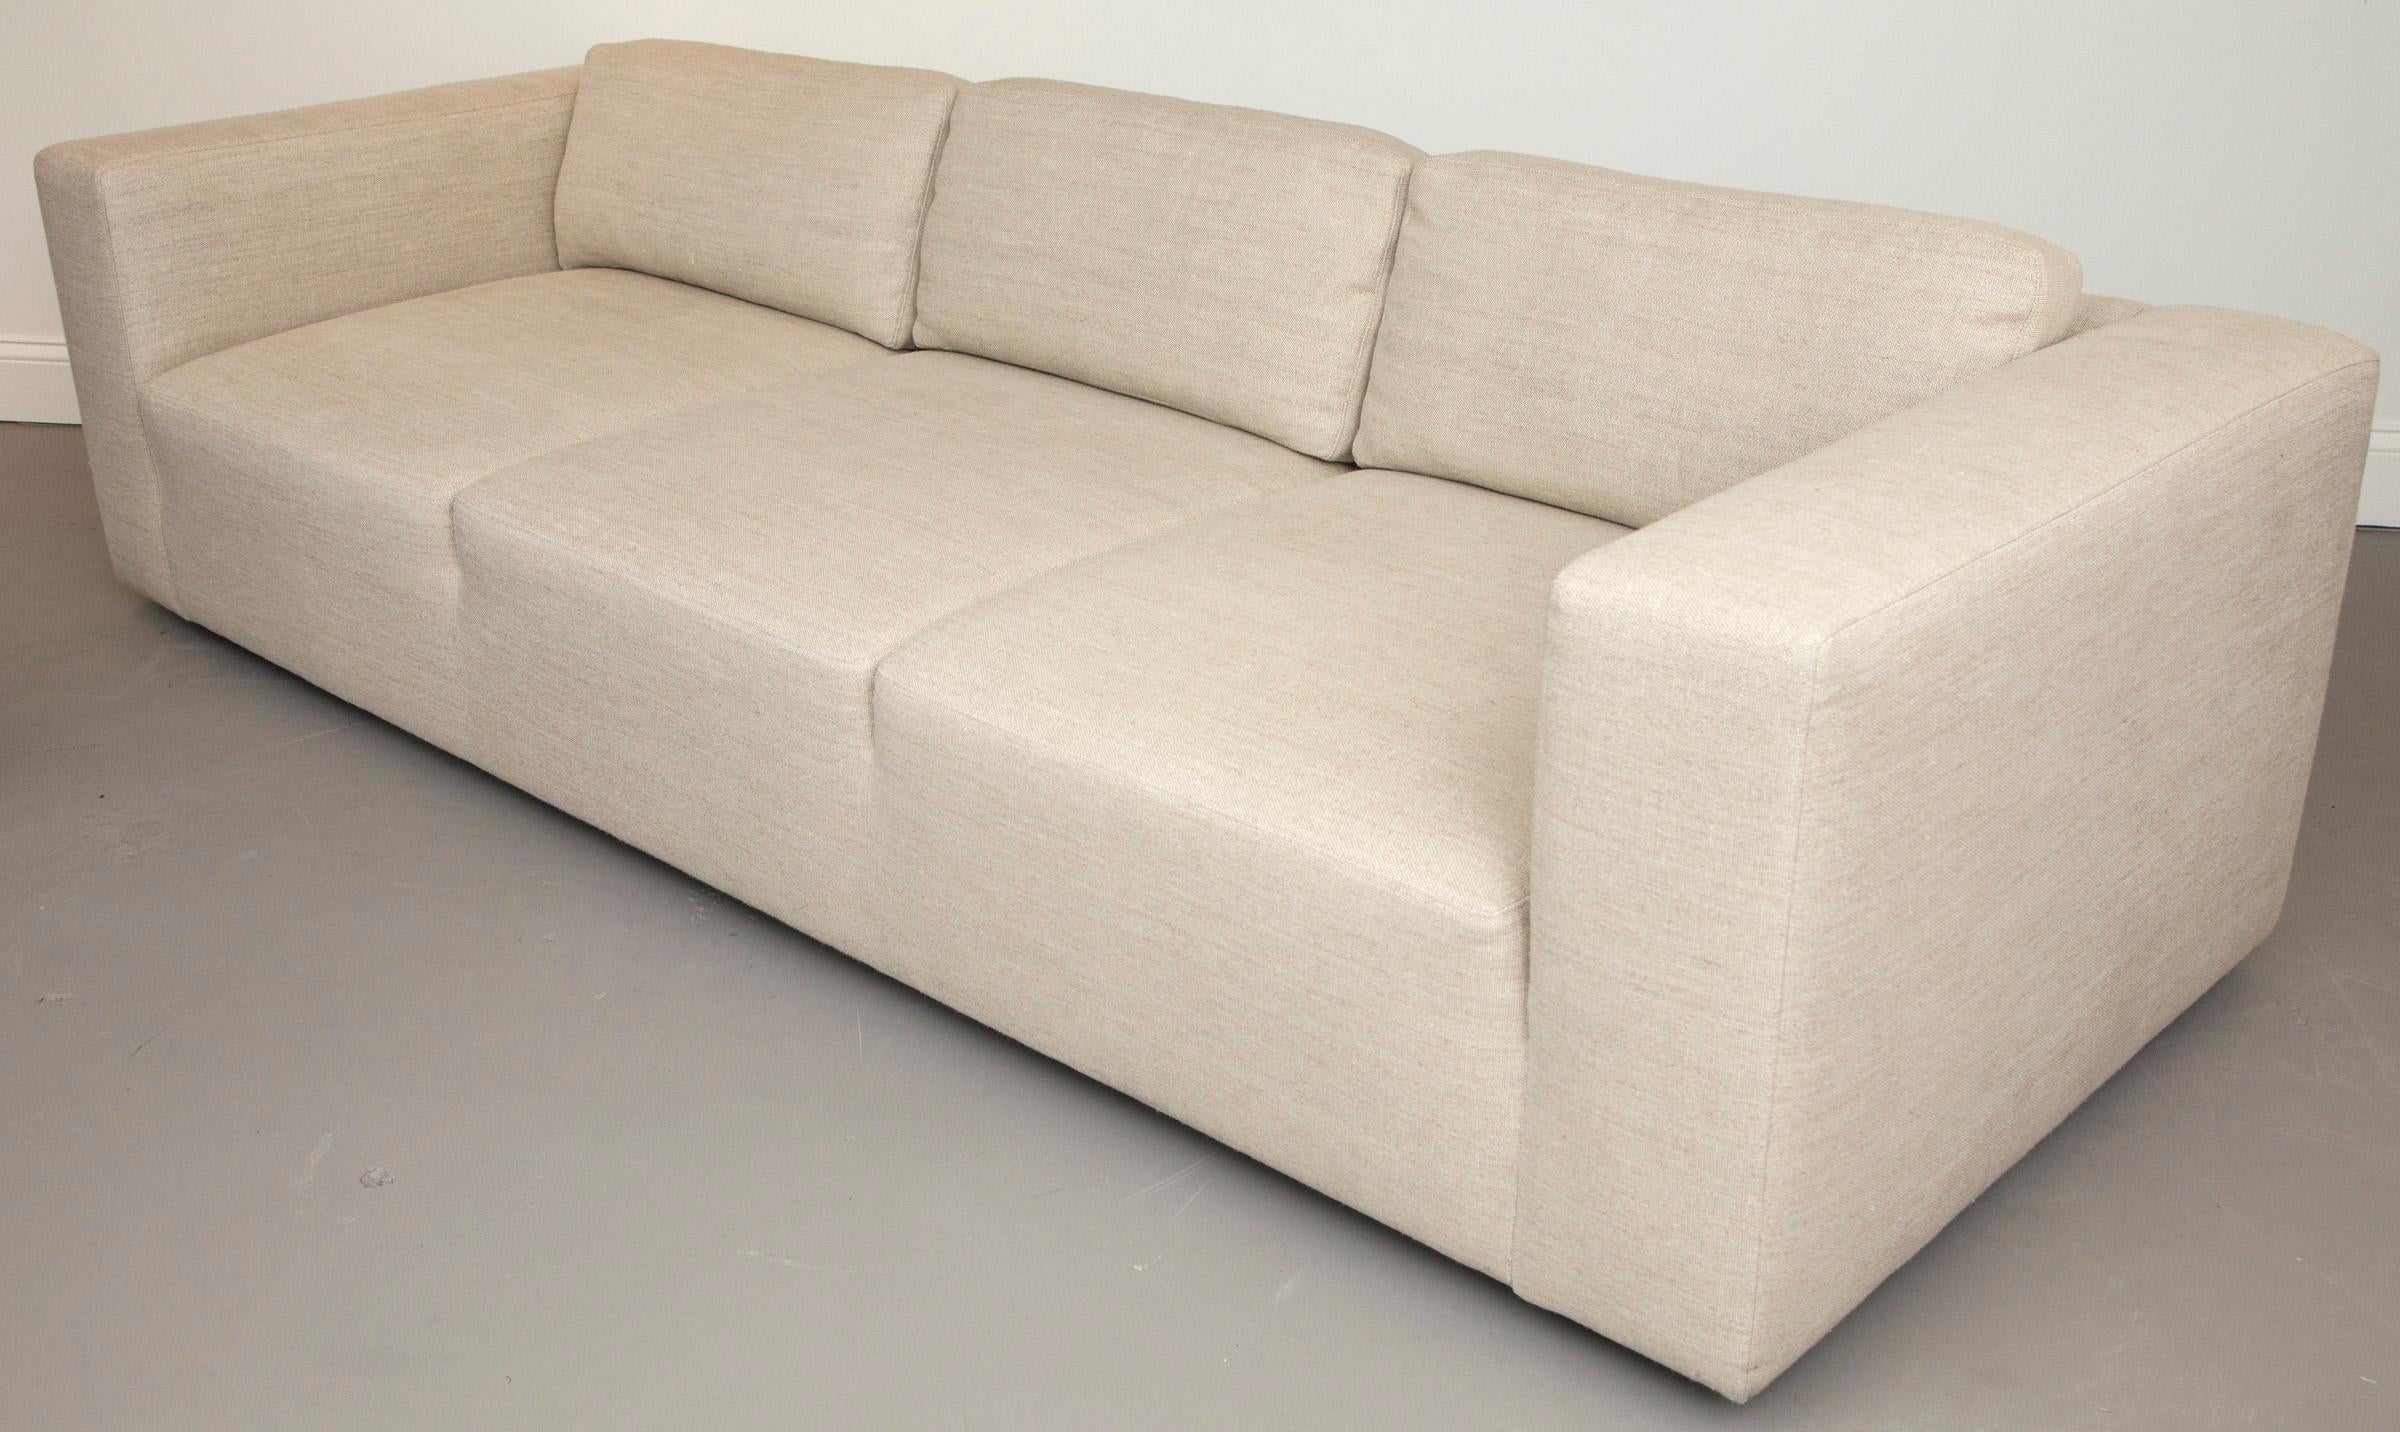 Mid-Century Modern sofa redone in flax belgian linen.